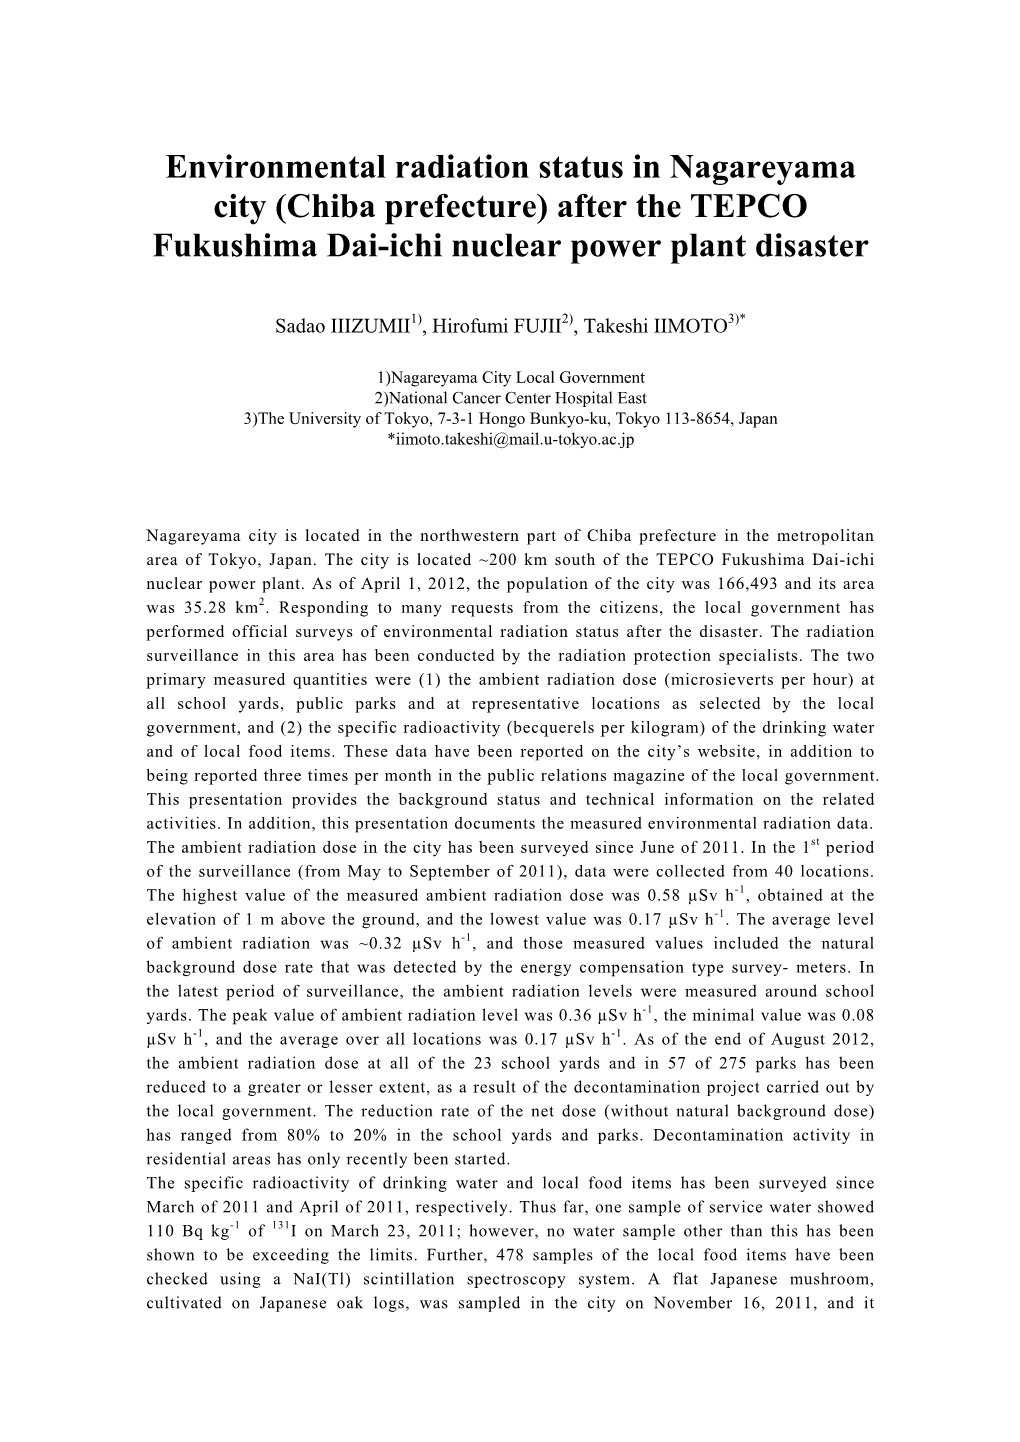 Environmental Radiation Status in Nagareyama City (Chiba Prefecture) After the TEPCO Fukushima Dai-Ichi Nuclear Power Plant Disaster